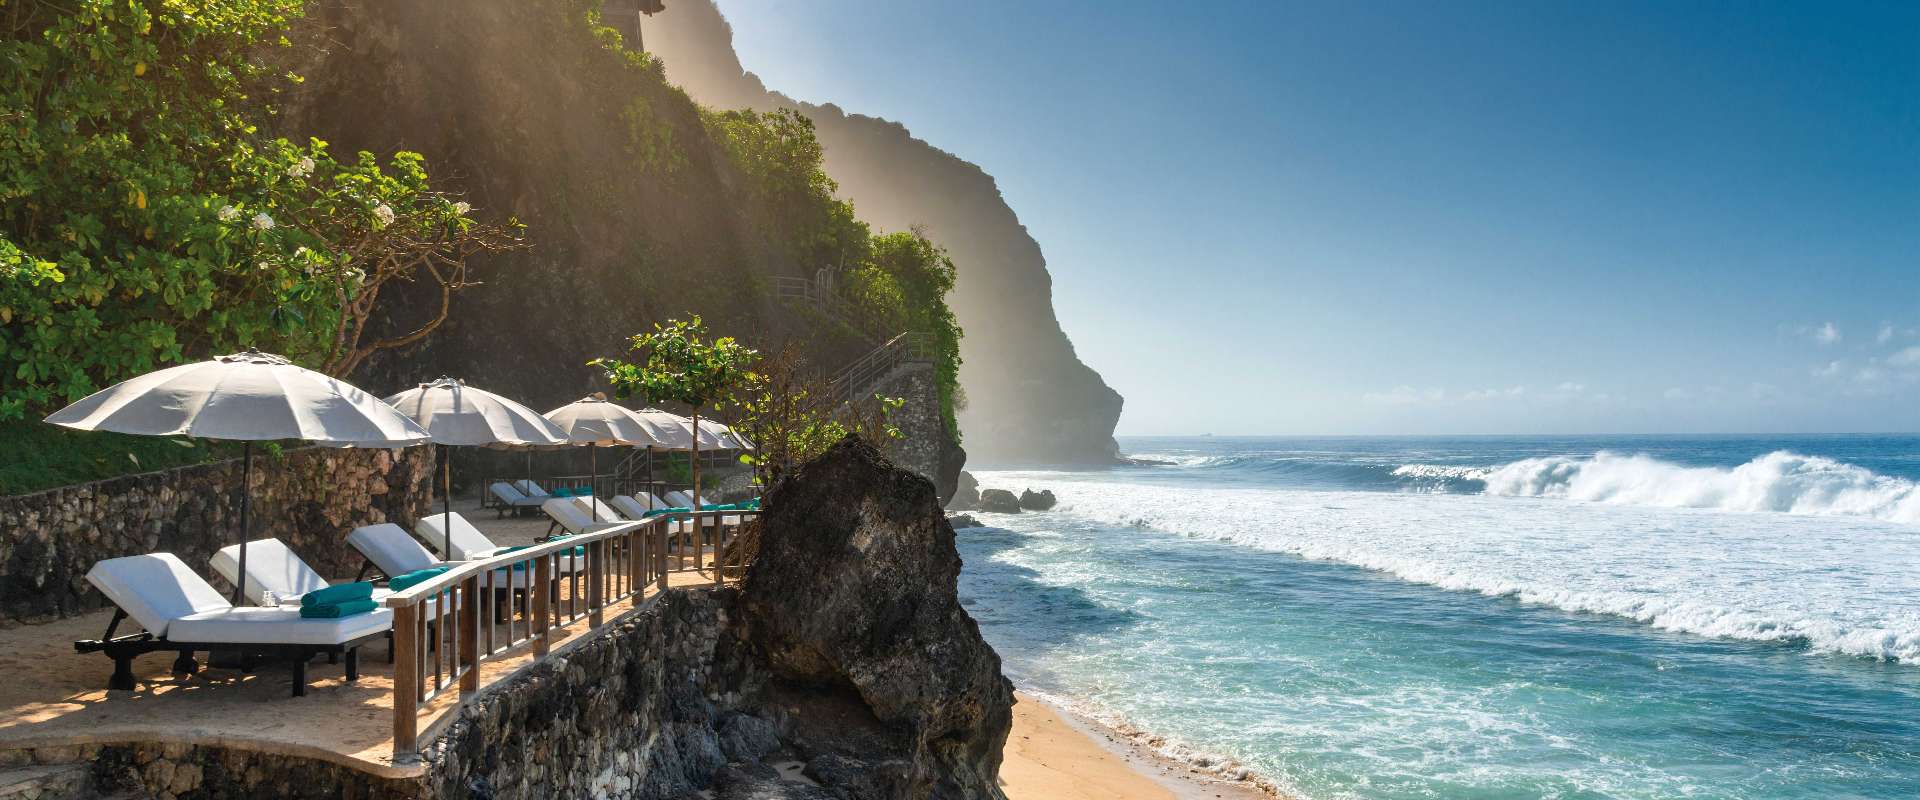 Bulgari Resort Bali - The Private Beach